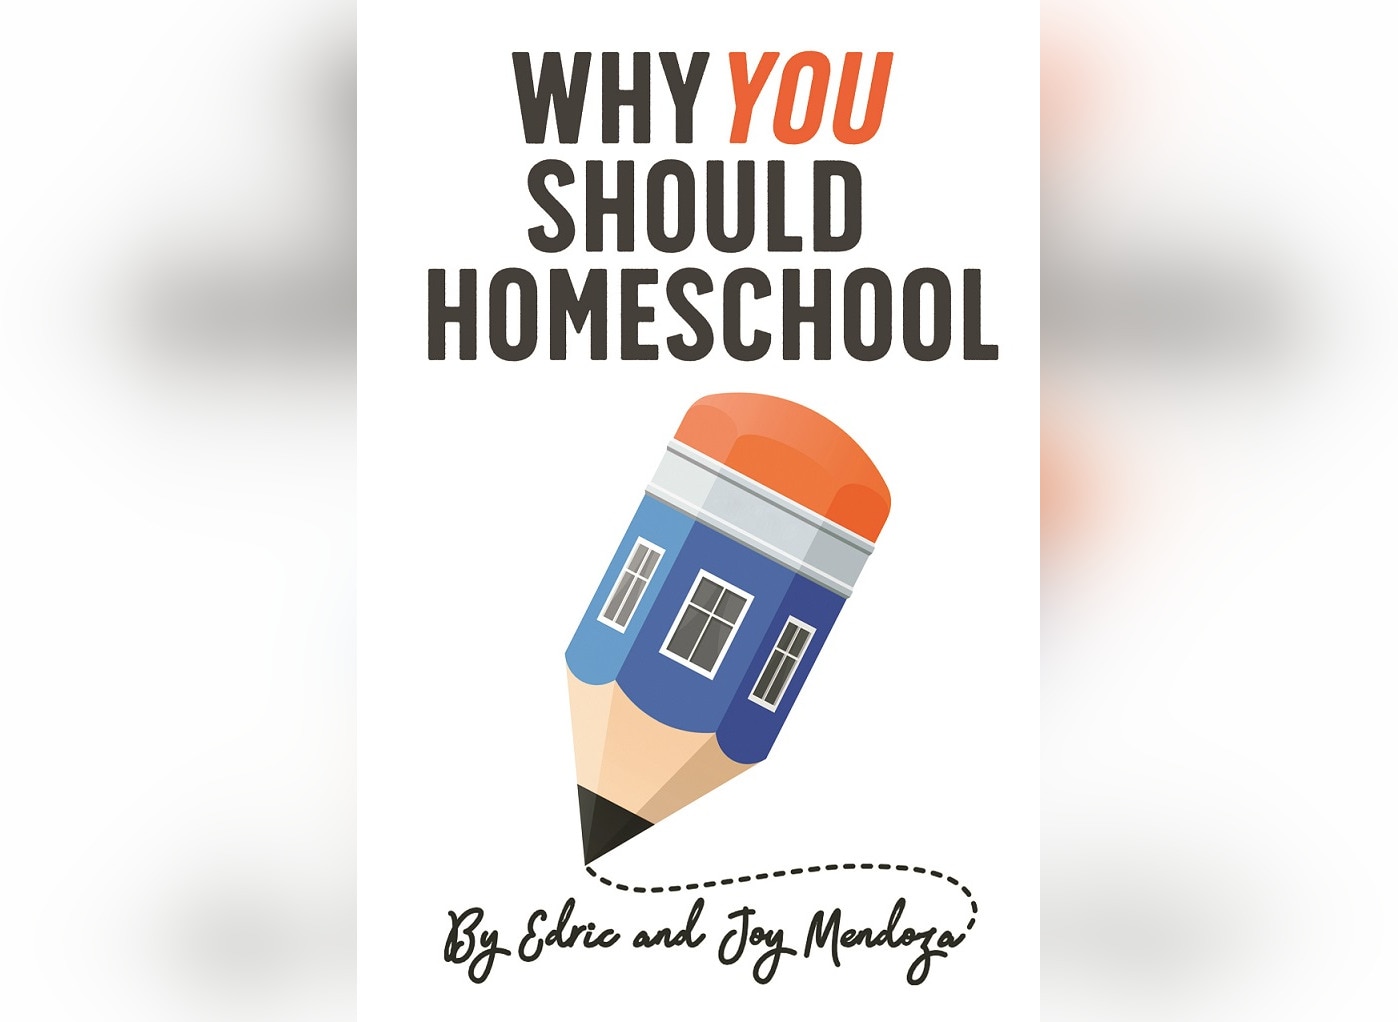 Edric and Joy Mendoza tell "Why You Should Homeschool" in new book